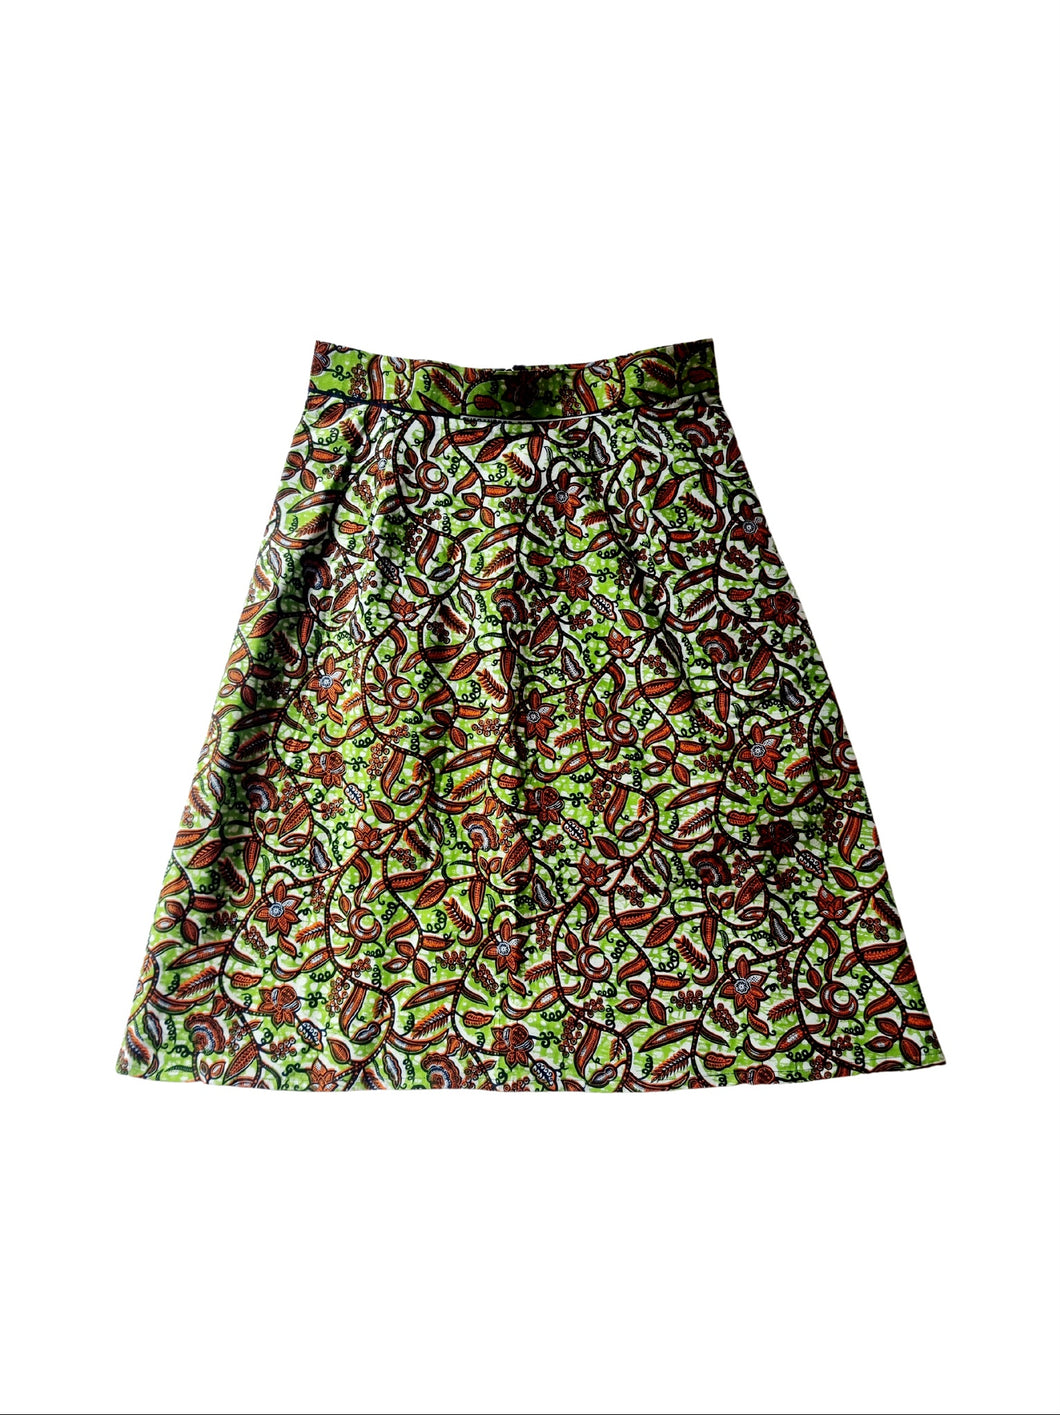 Waxprint cotton midi skirt.